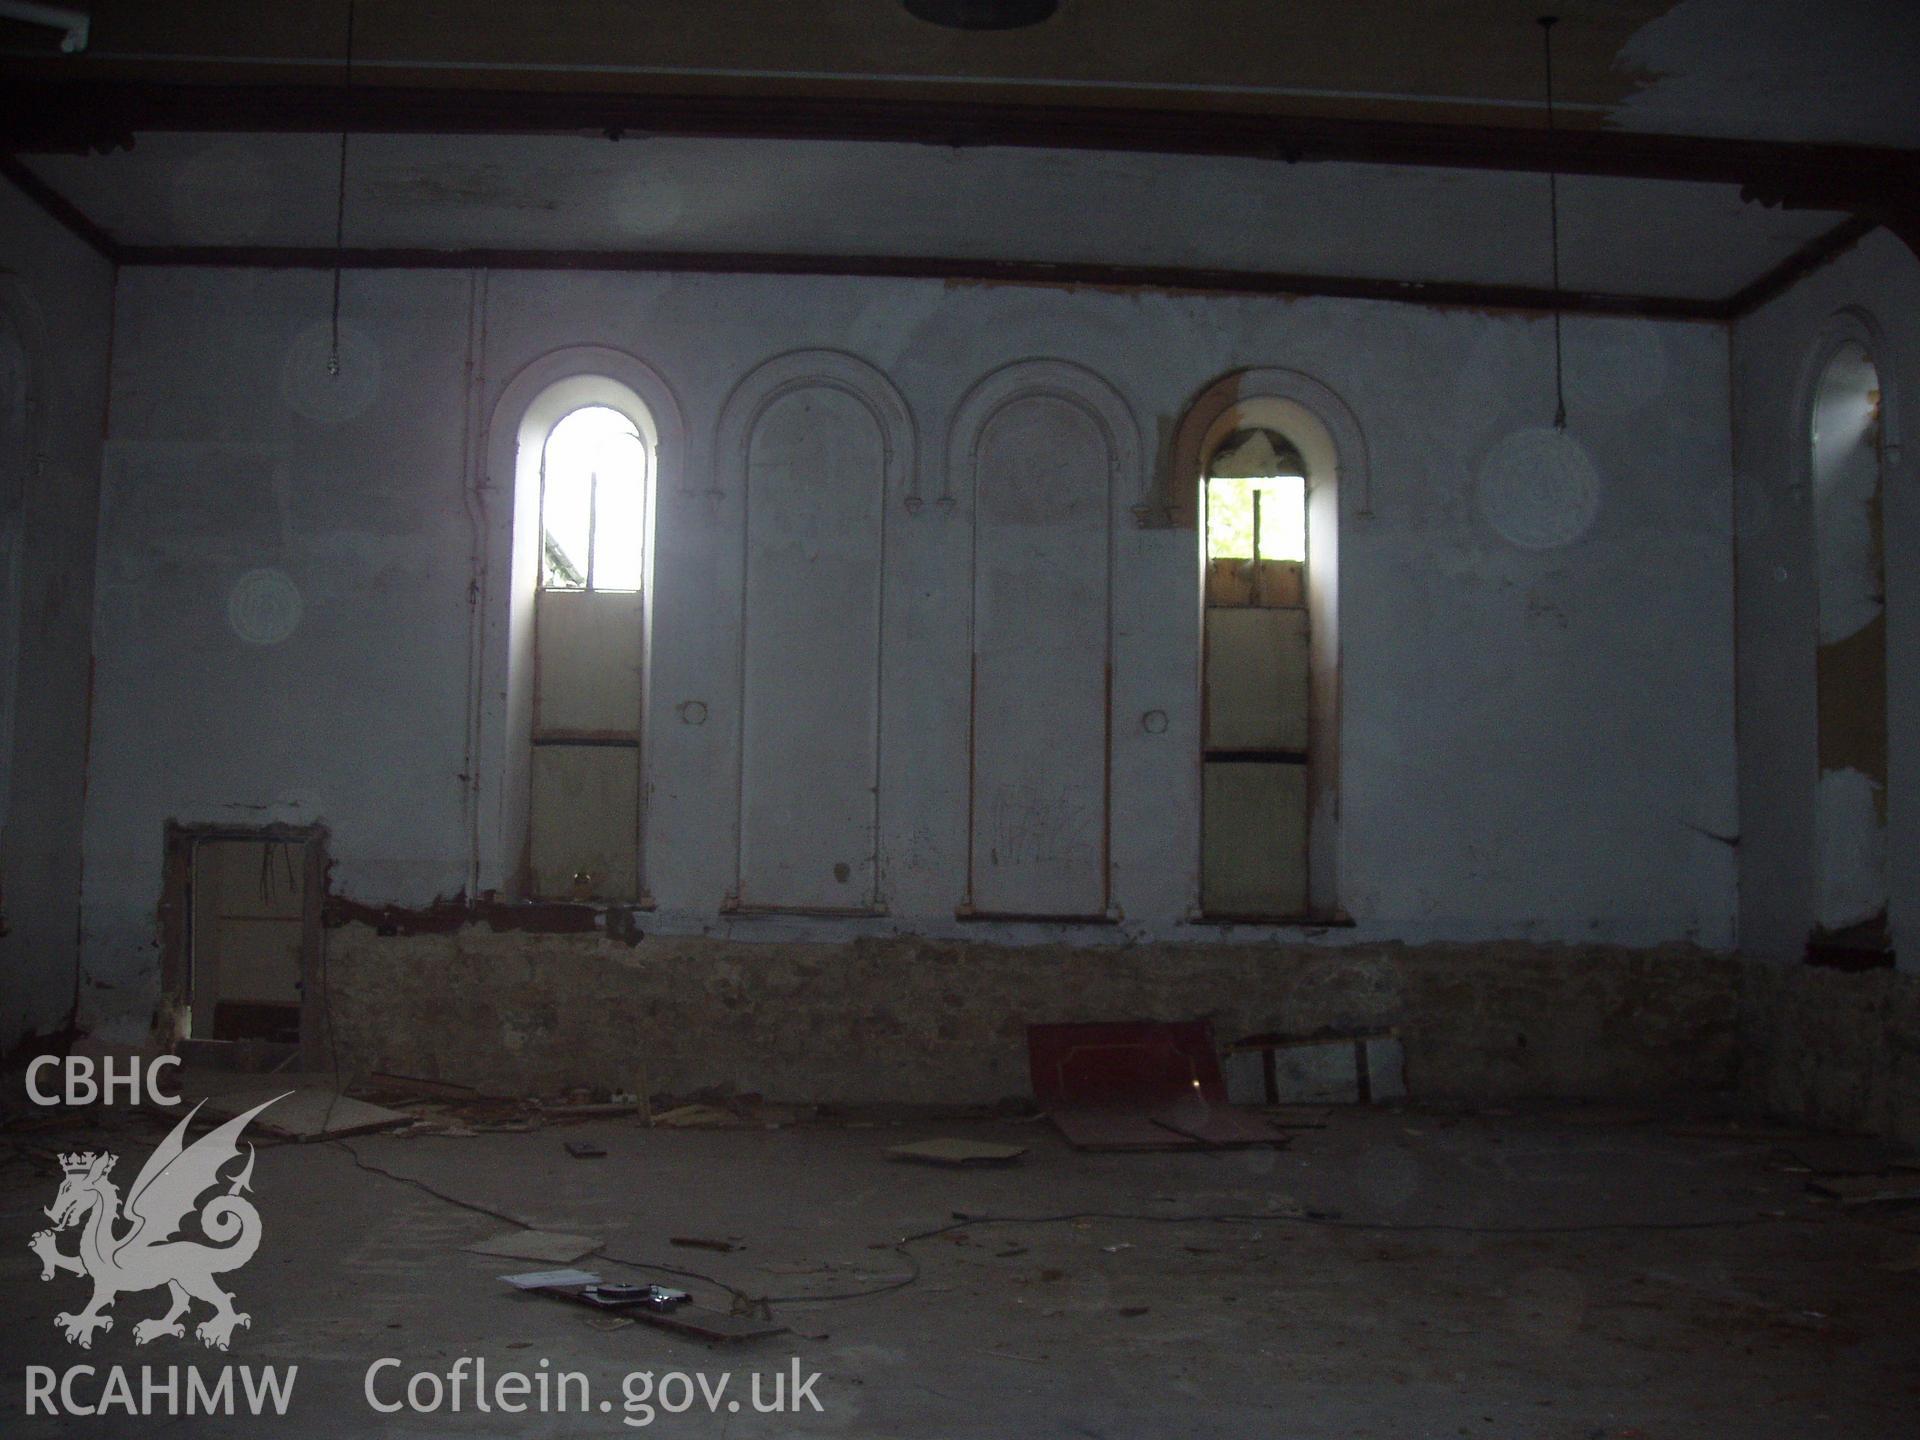 Bryn Seion Chapel, digital colour photograph showing interior.